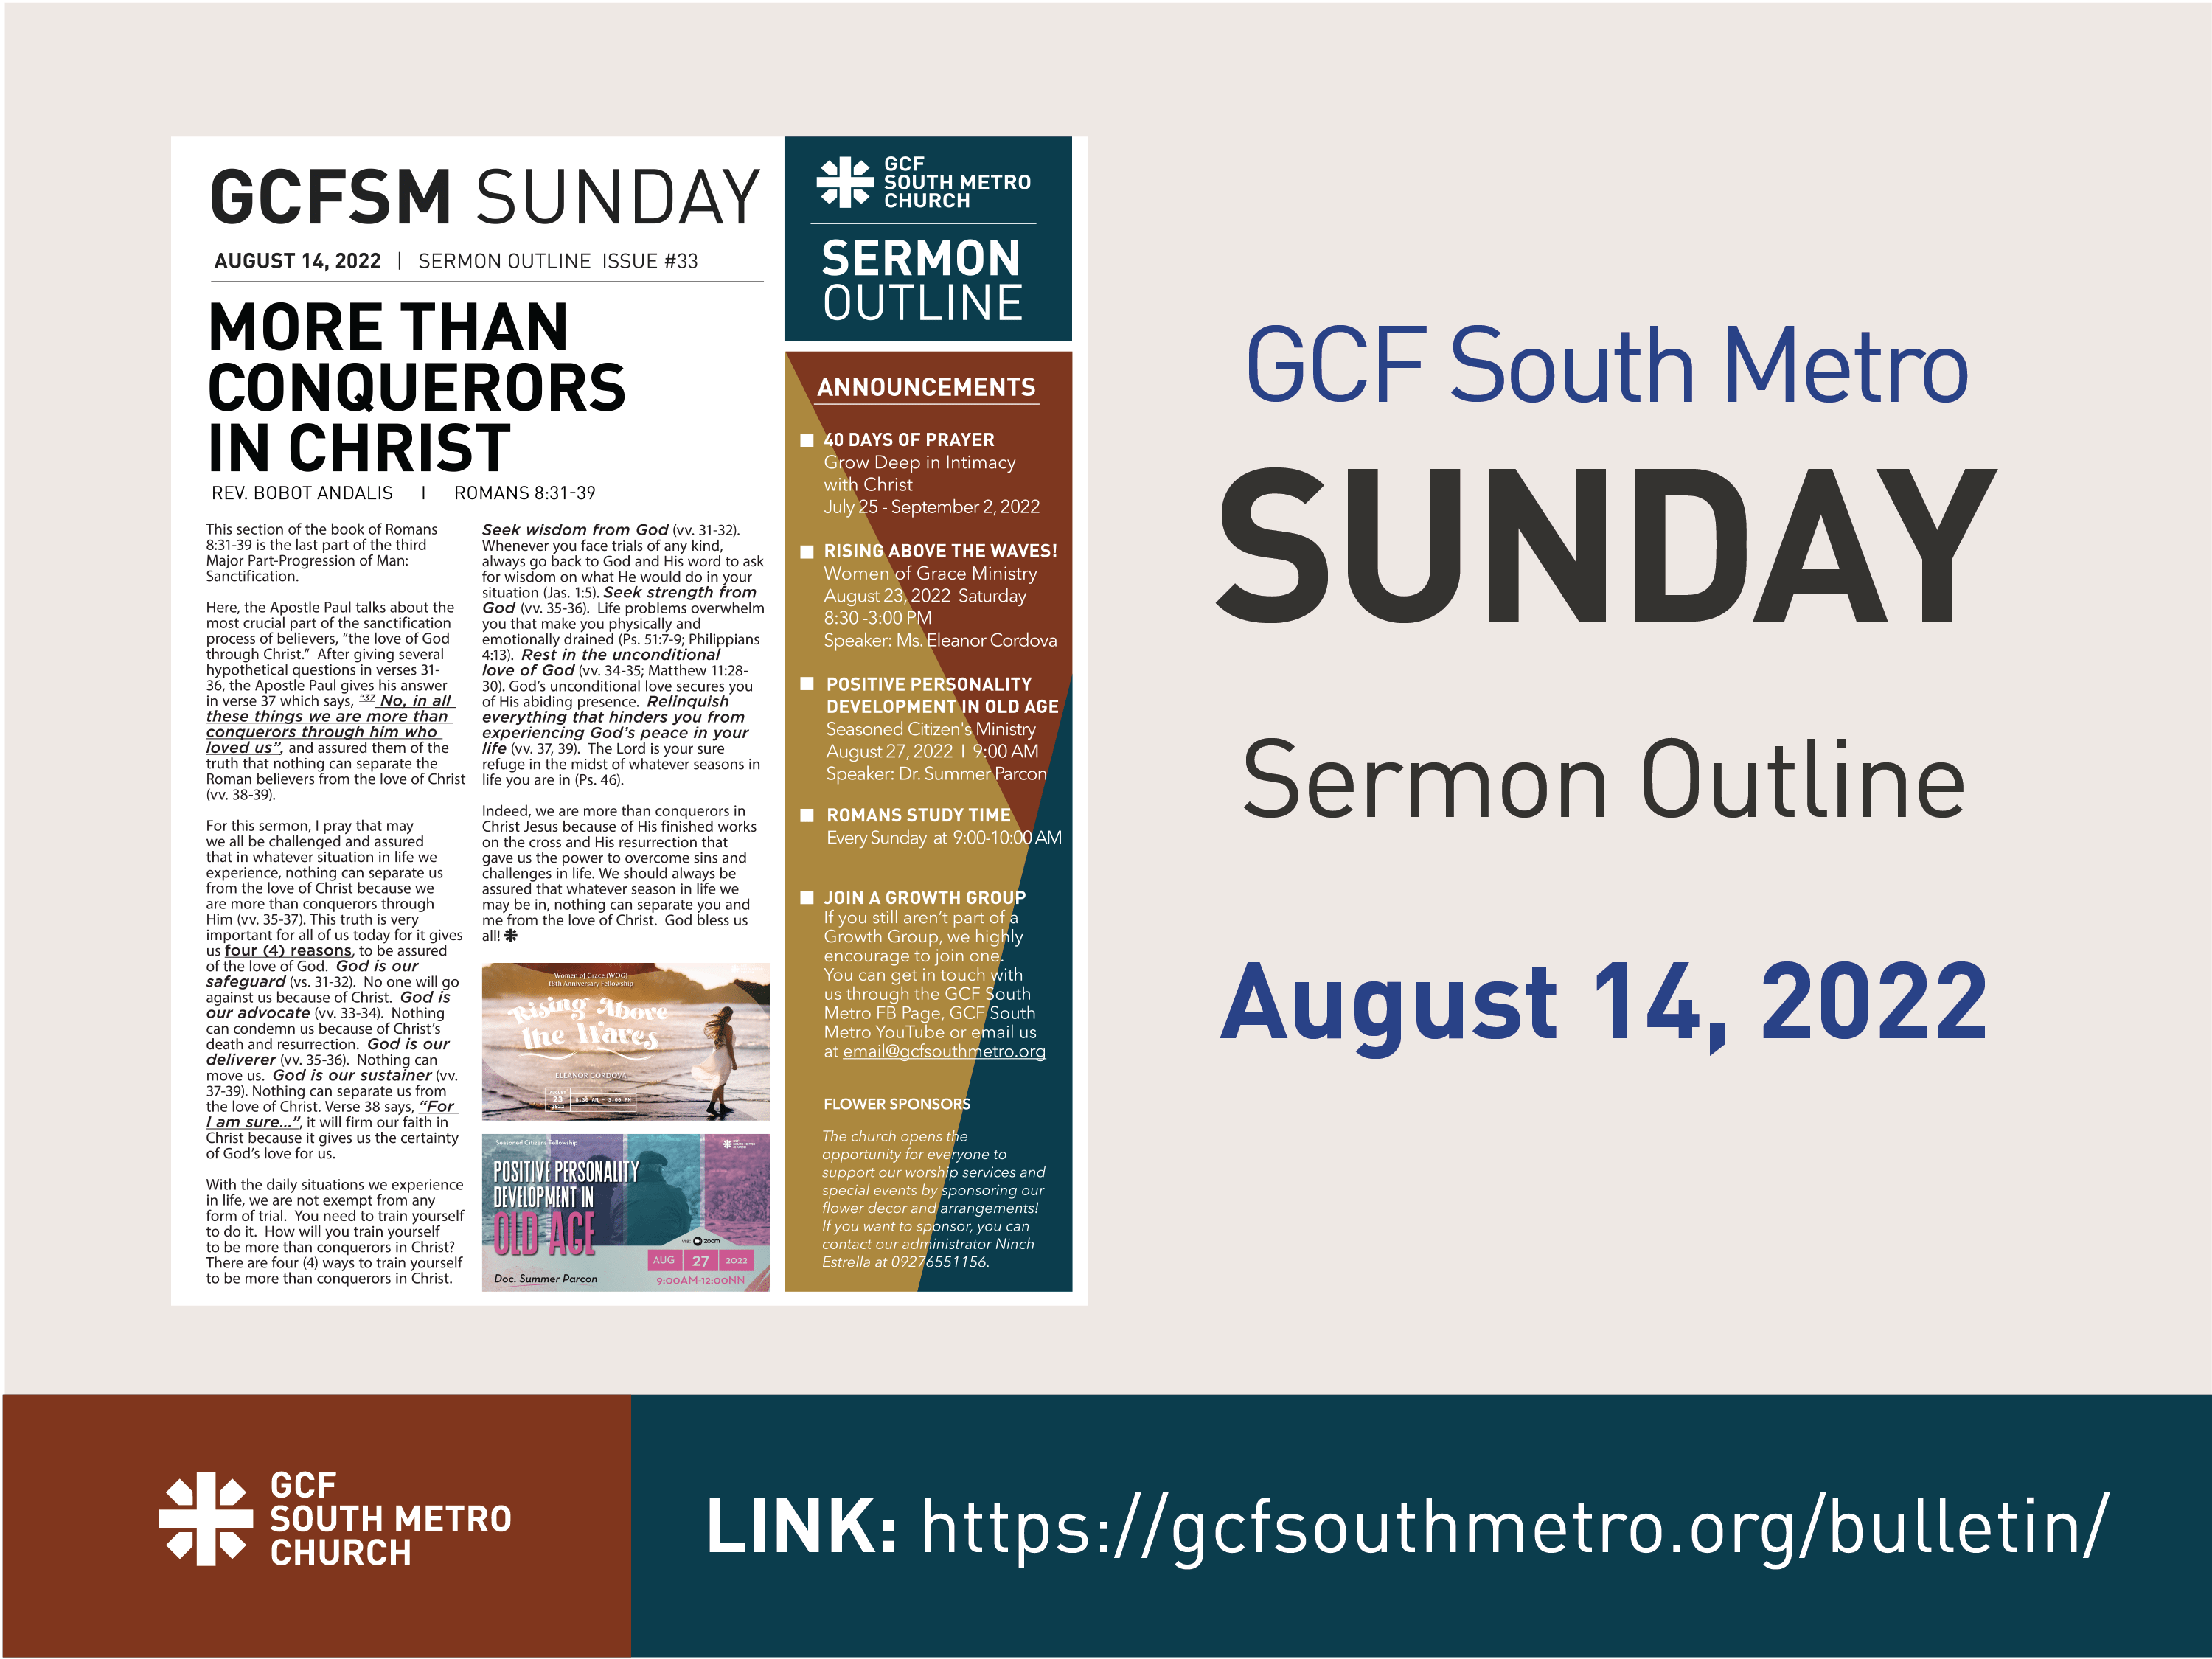 Sunday Bulletin – Sermon Outline, August 14, 2022 (PM Service)